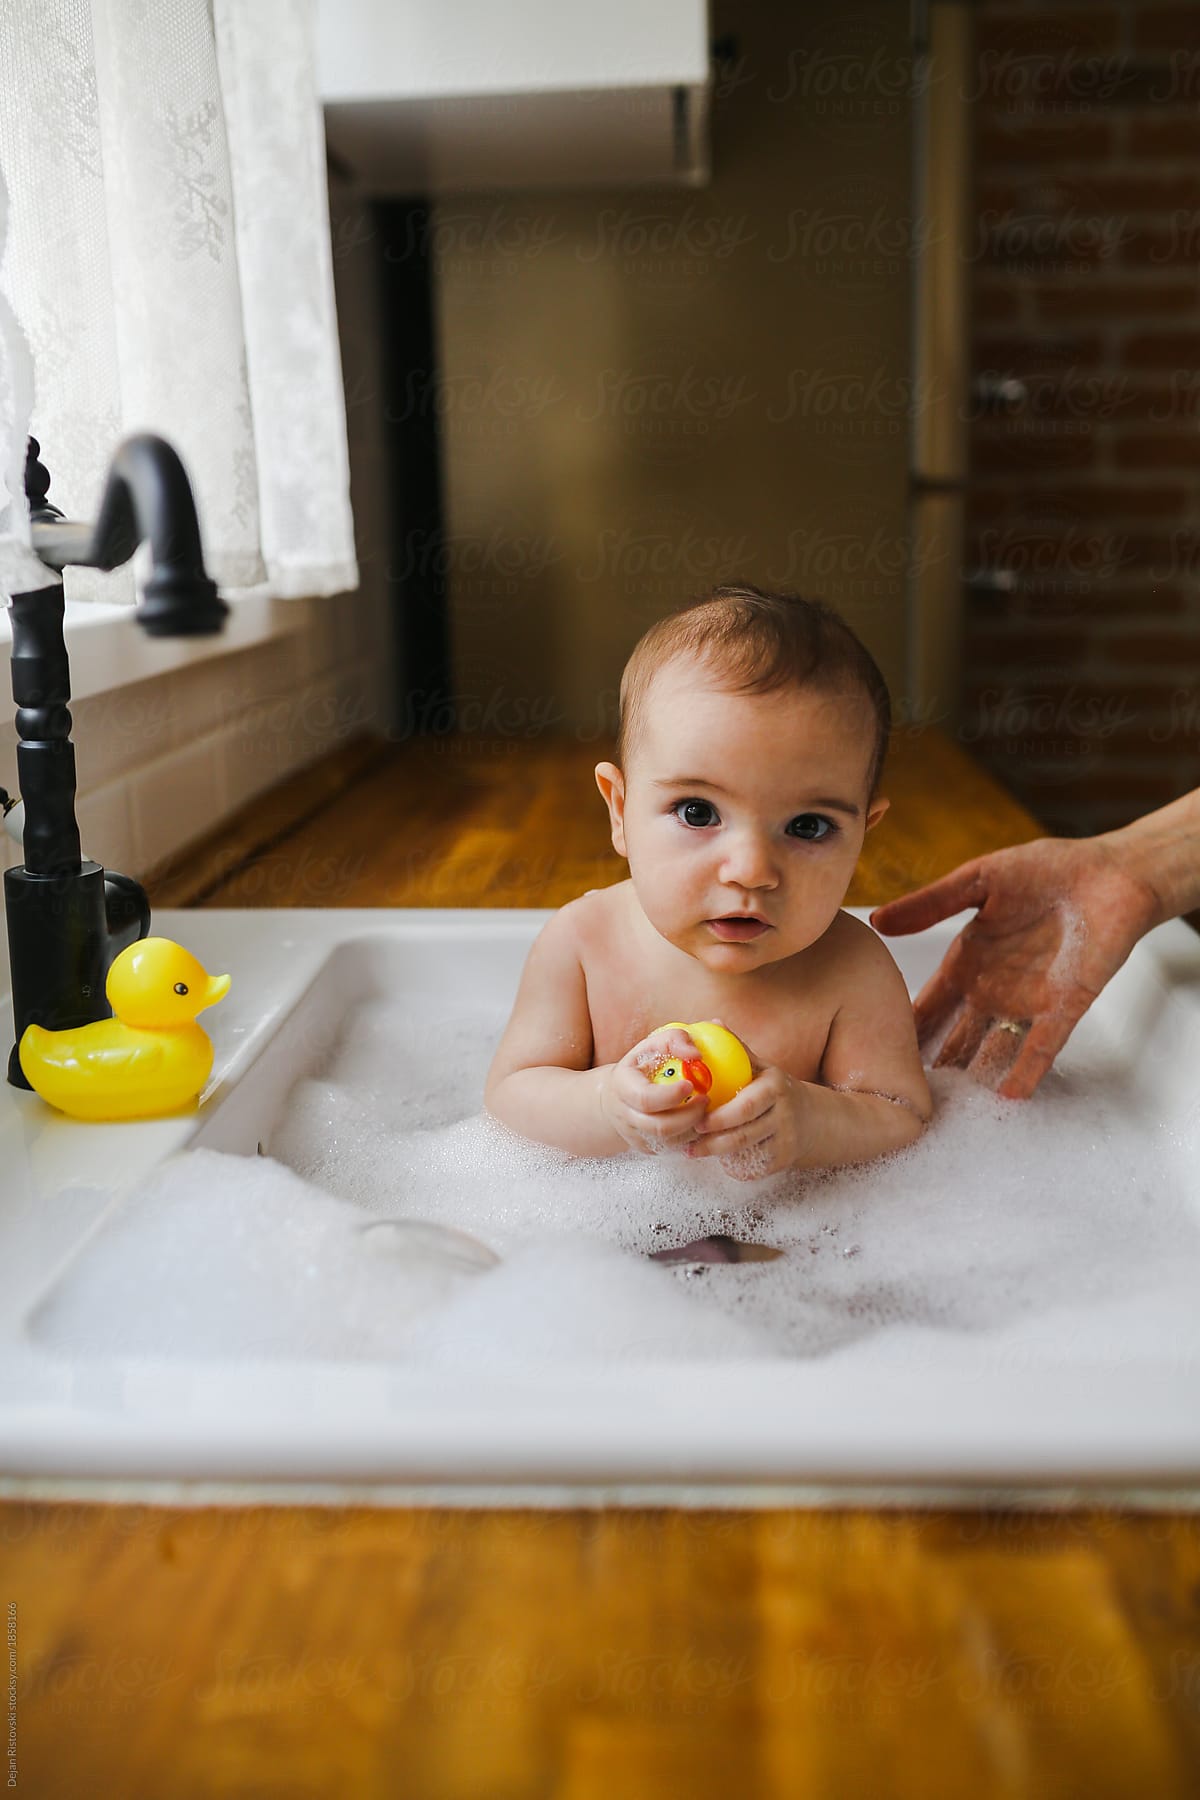 Baby having a bath in the kitchen sink by Dejan Ristovski